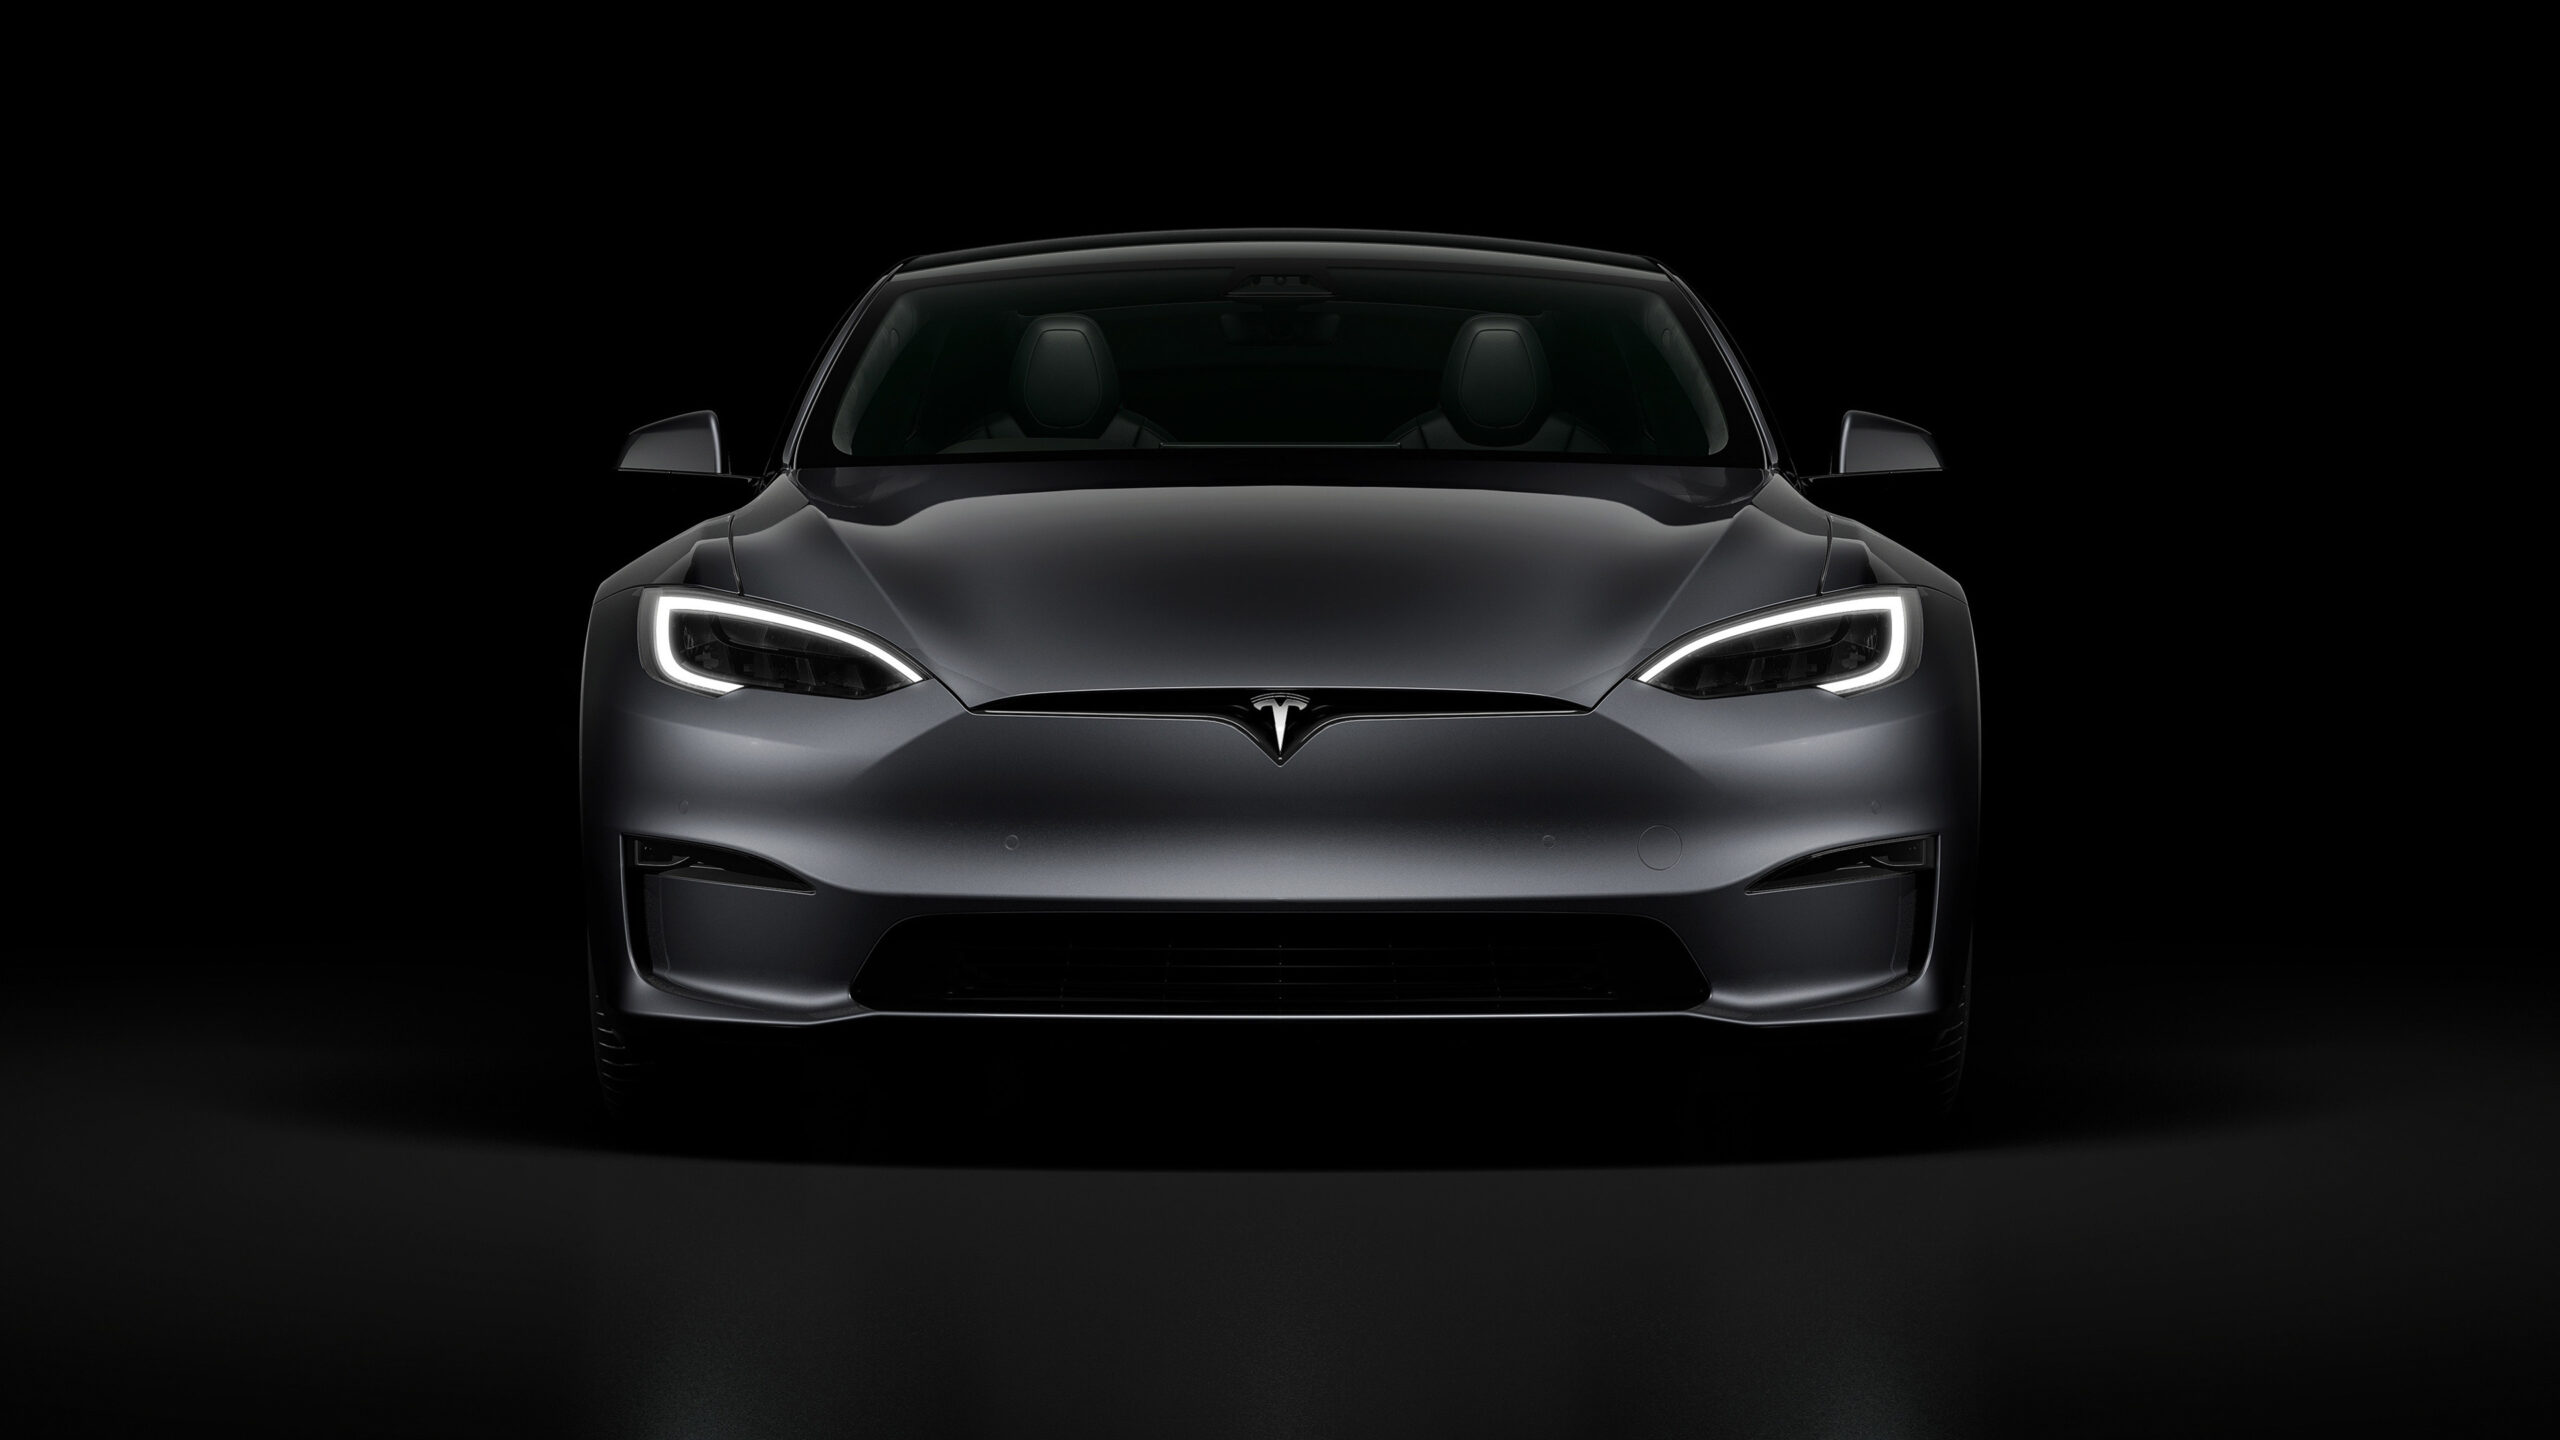 2021 Tesla Model S Plaid Wallpapers